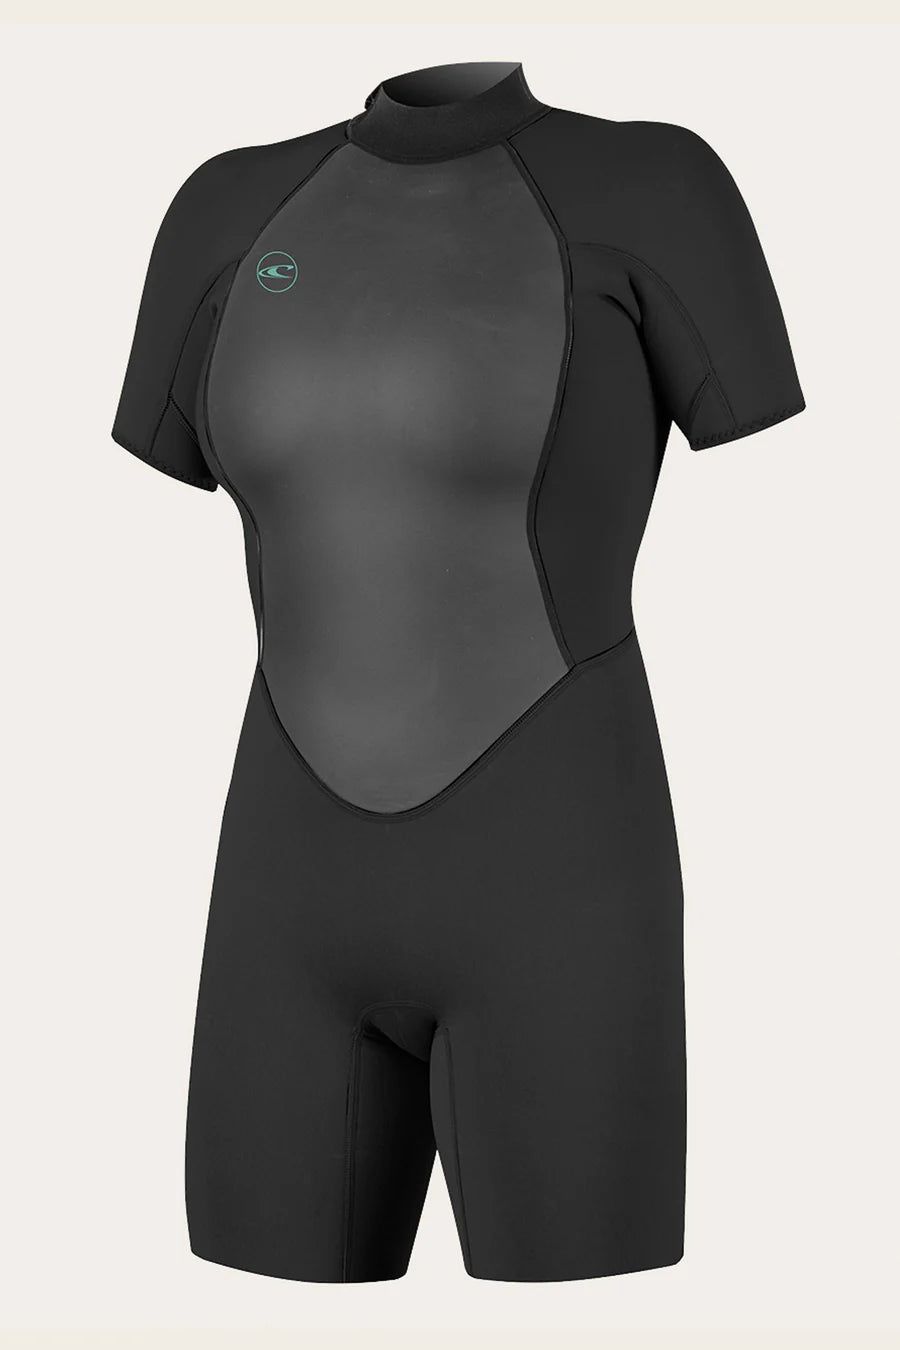 O'Neill Women's Reactor-2 2mm Back Zip S/S Spring Wetsuit